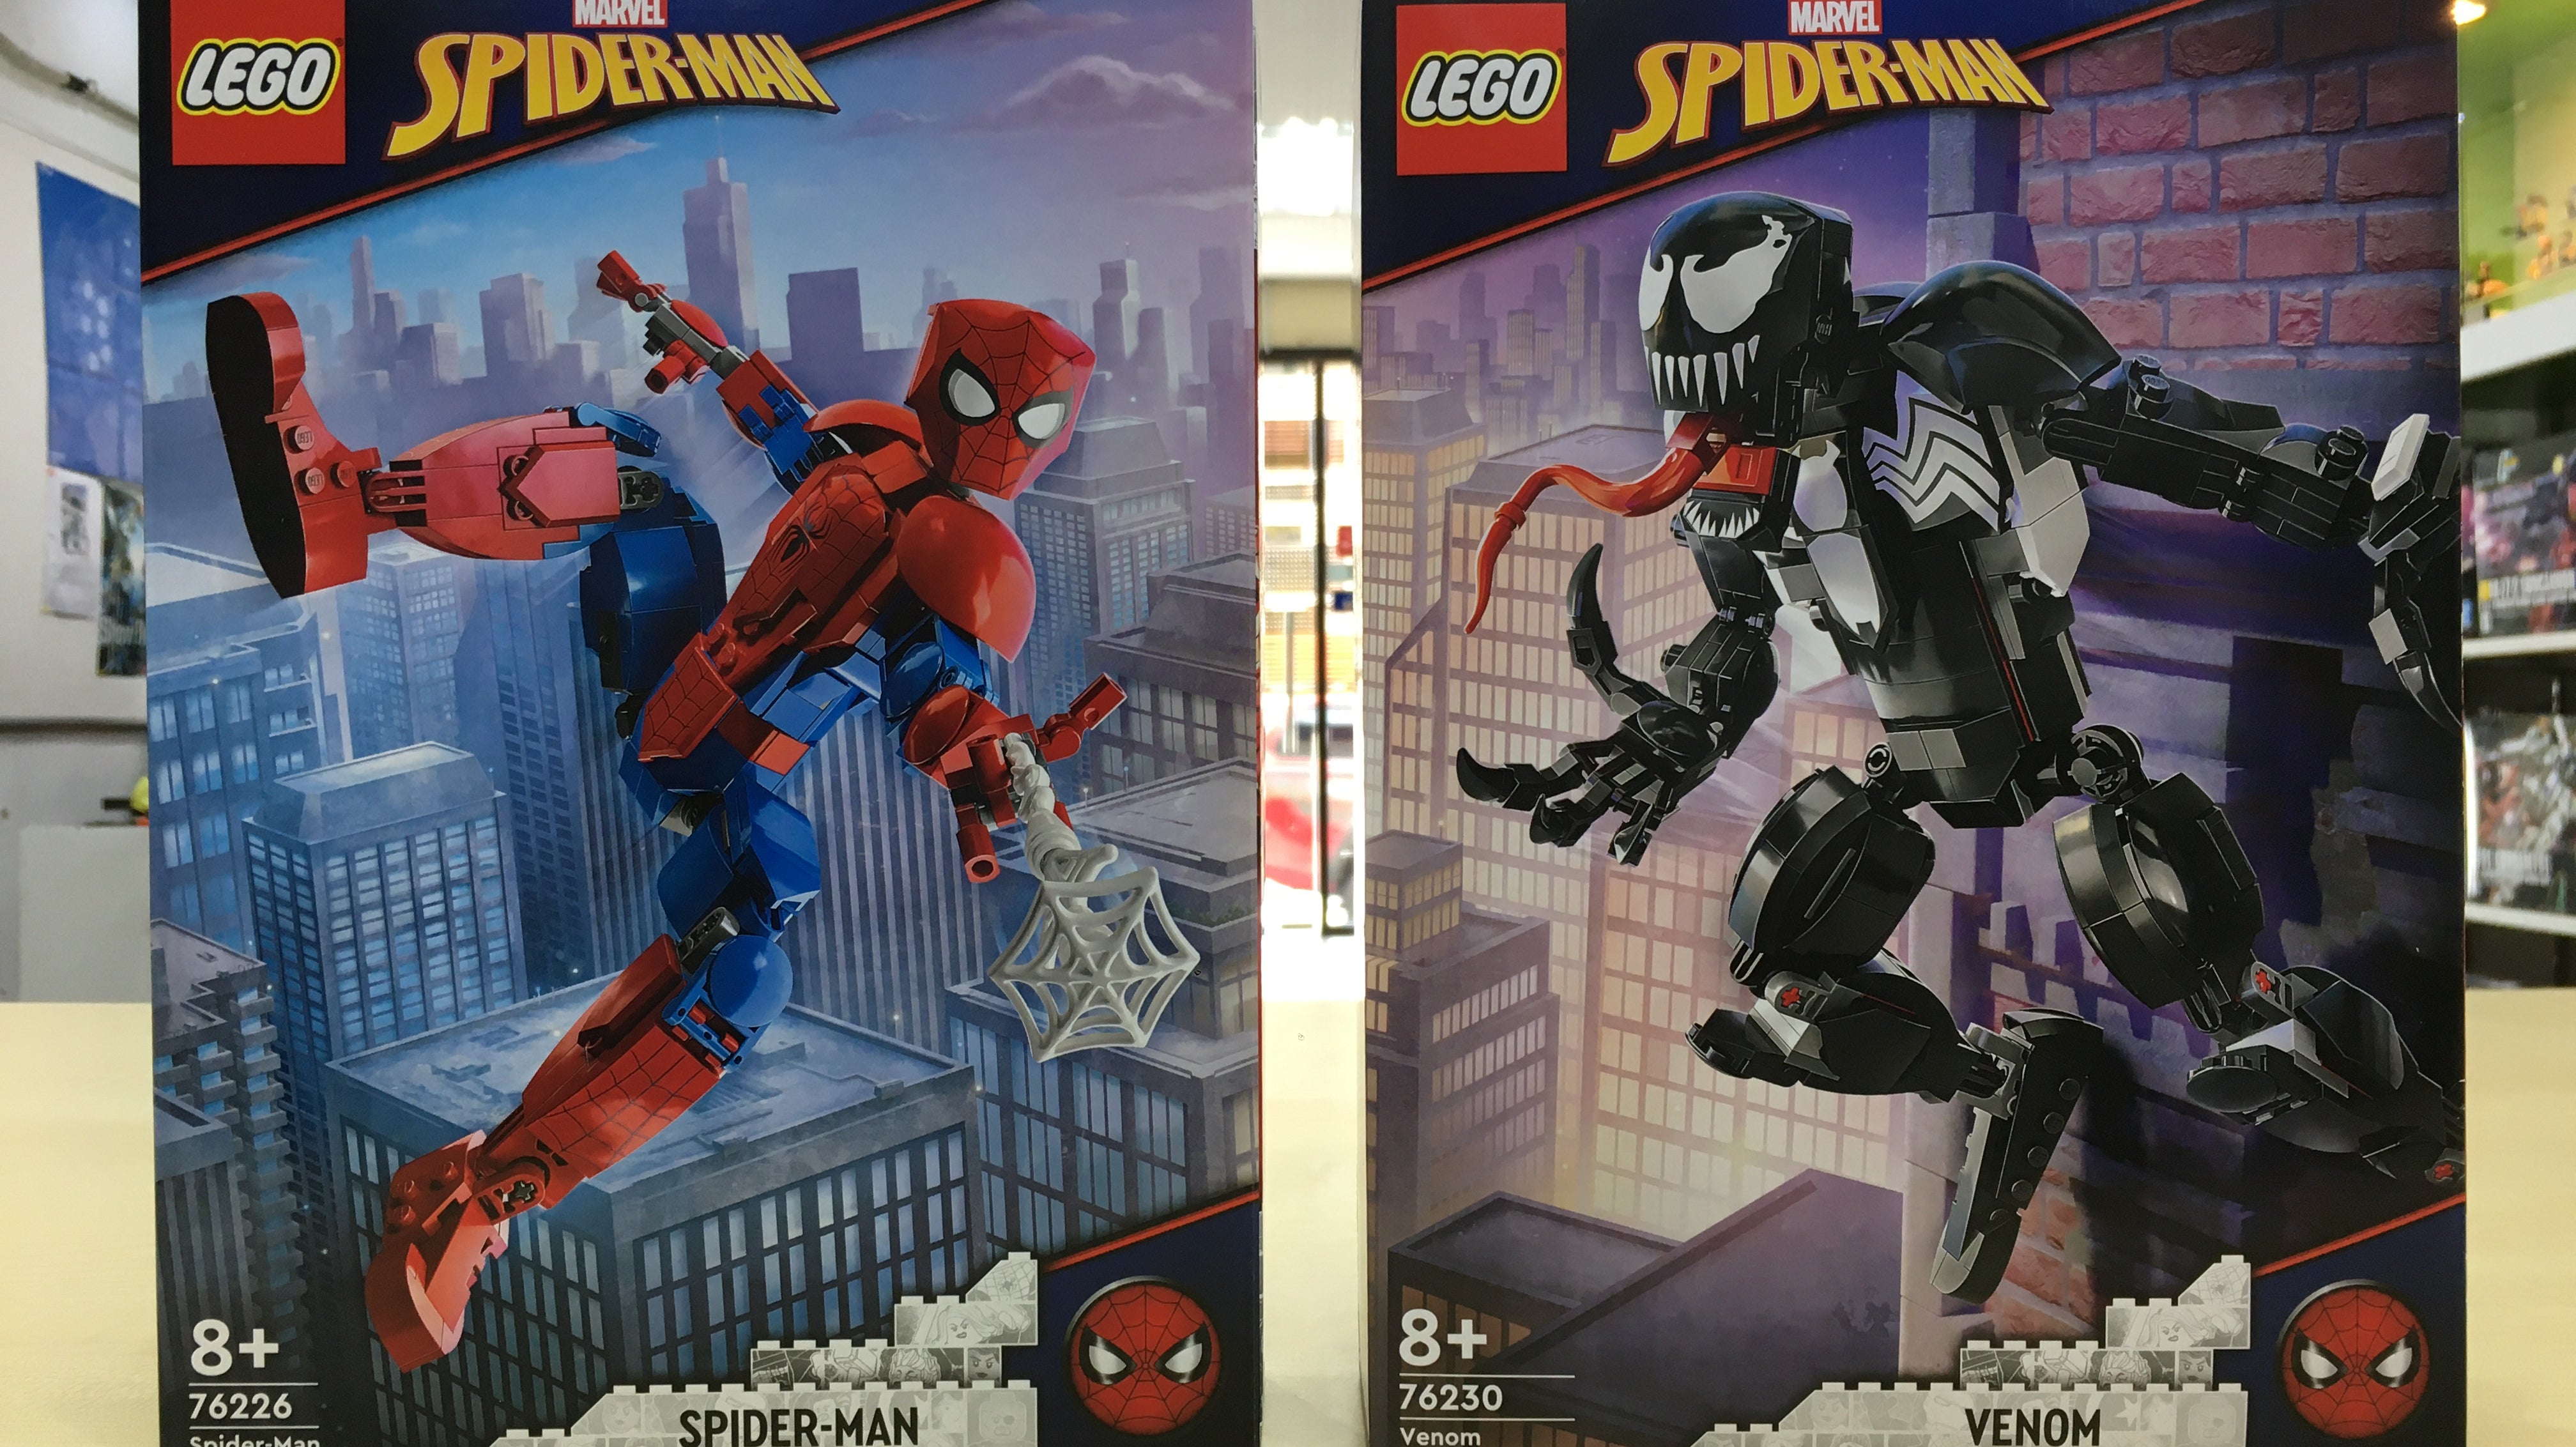 LEGO Spider-Man Figure & LEGO Venom Figure